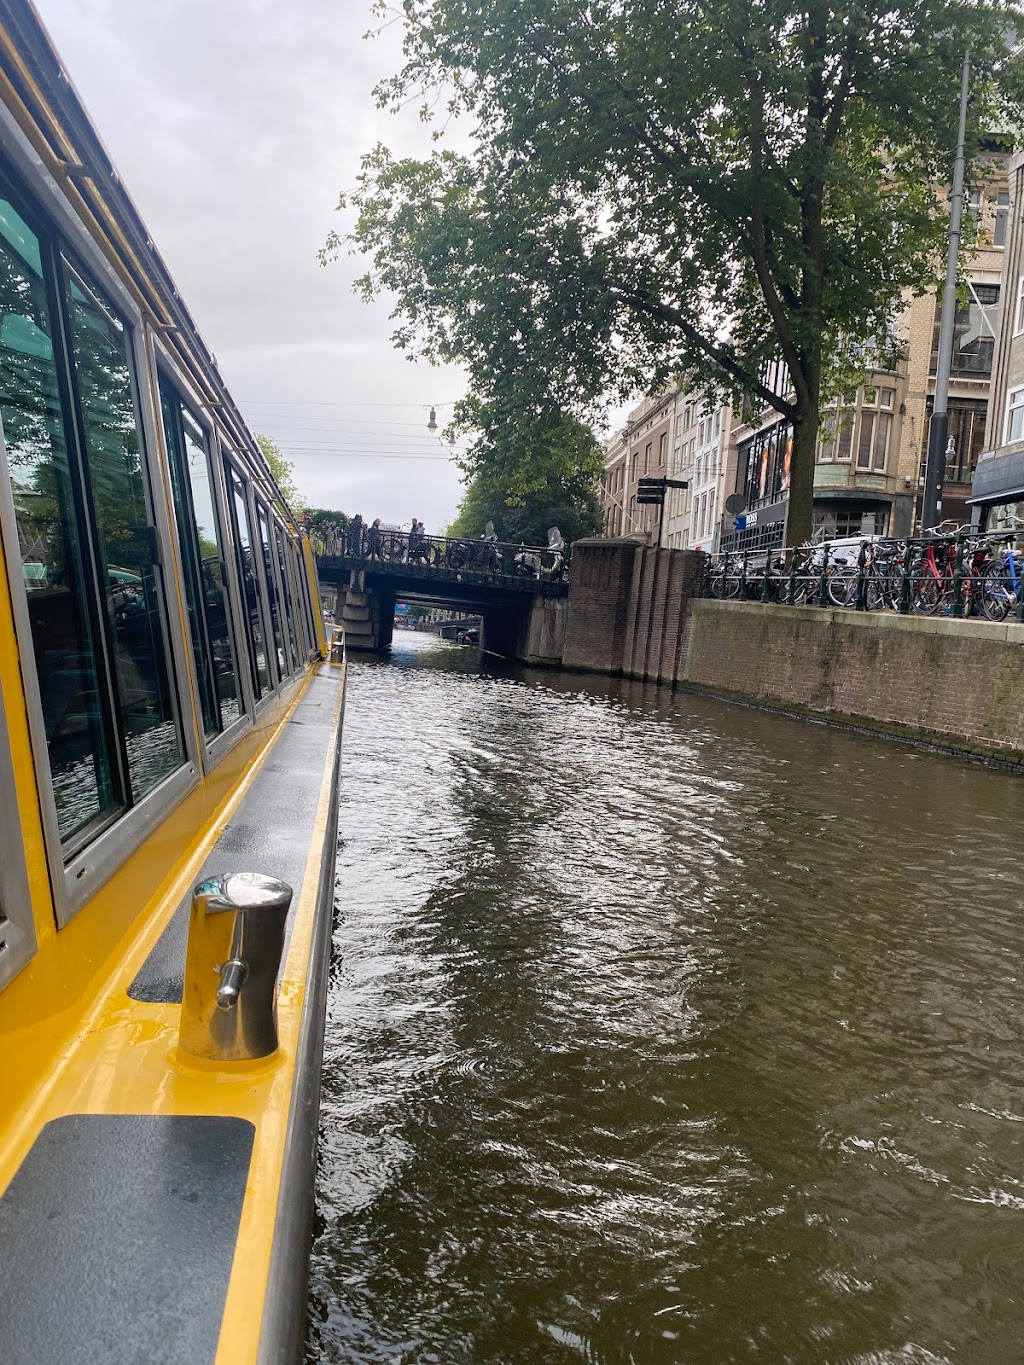 Flying Dutch Boats | Prinsengracht 267, 1016 GV Amsterdam, Netherlands | Phone: 2252837